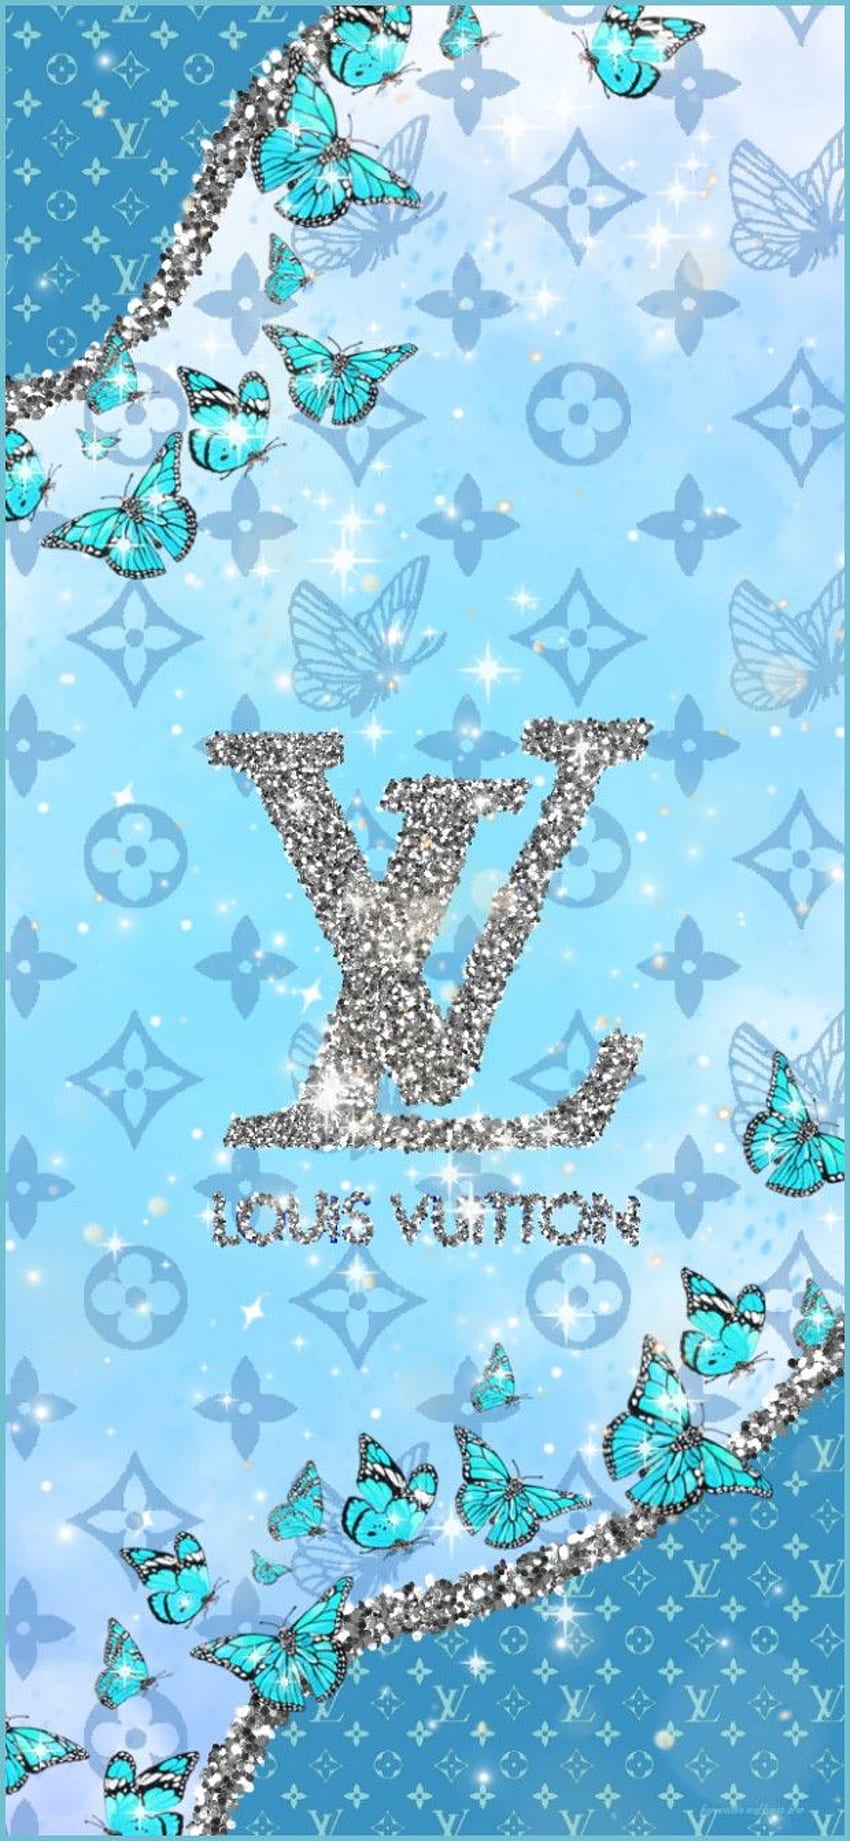 Louis Vuitton Blue HD phone wallpaper